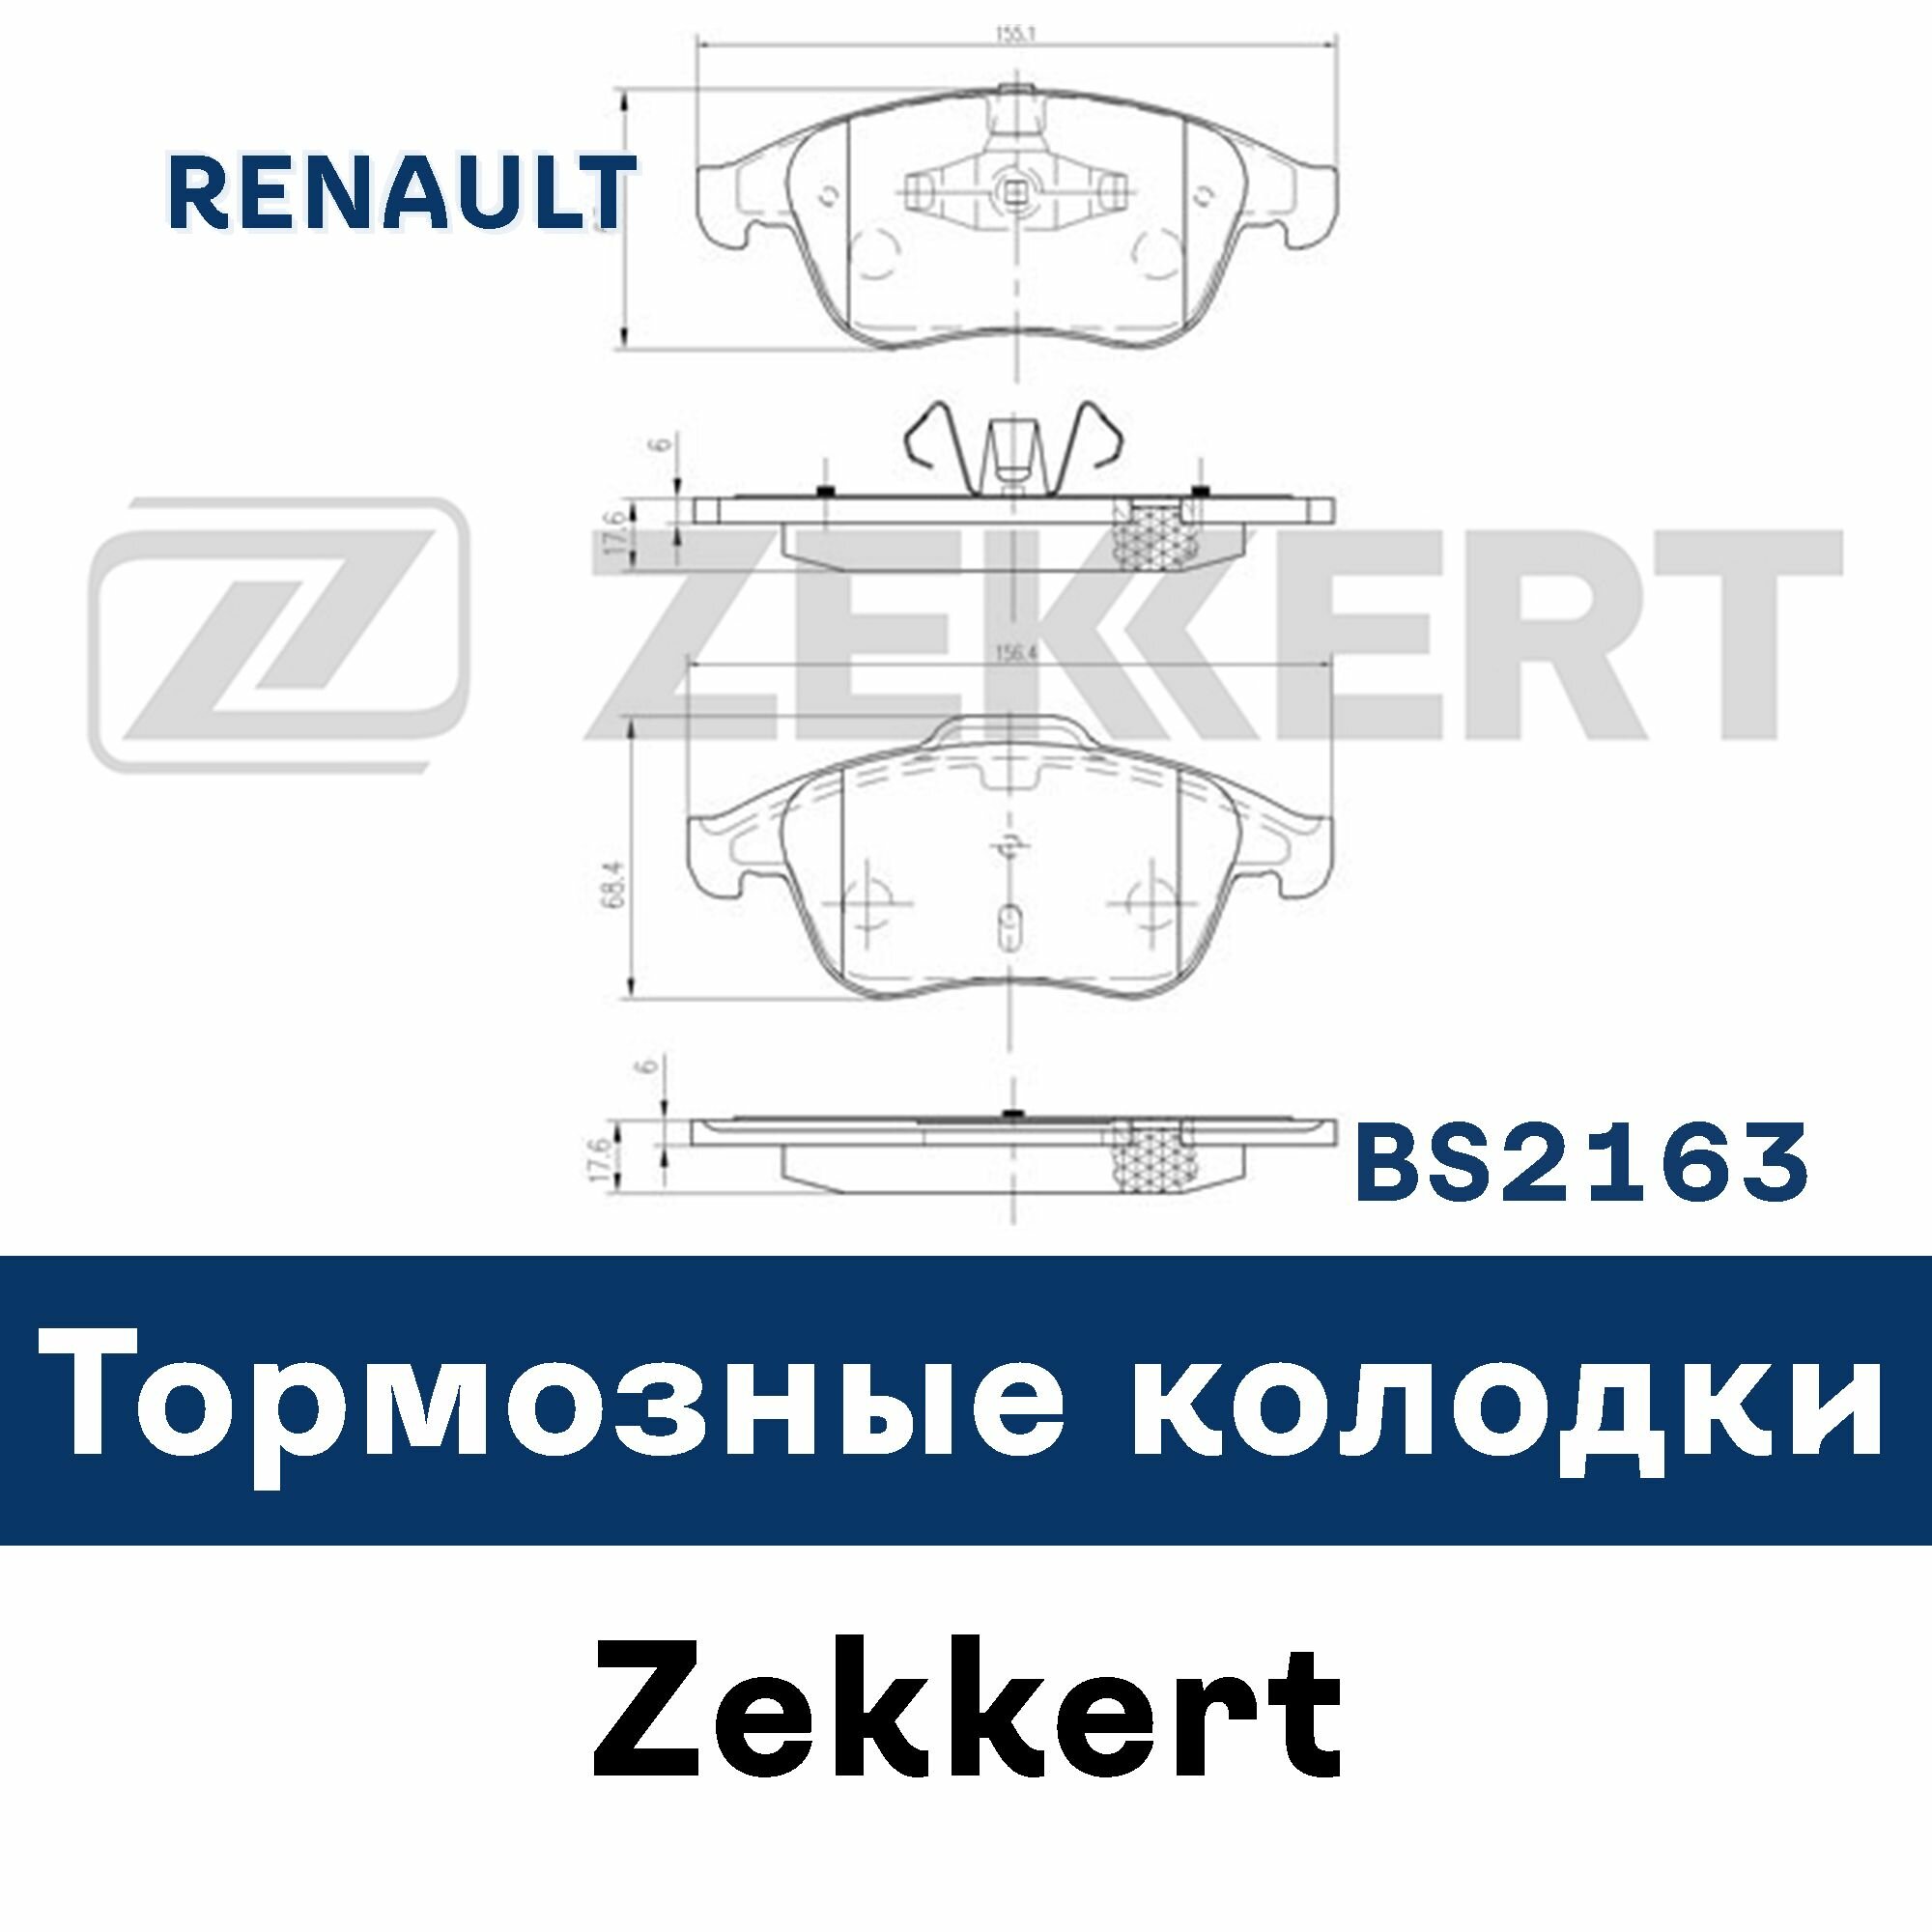 Тормозные колодки для RENAULT BS2163 ZEKKERT